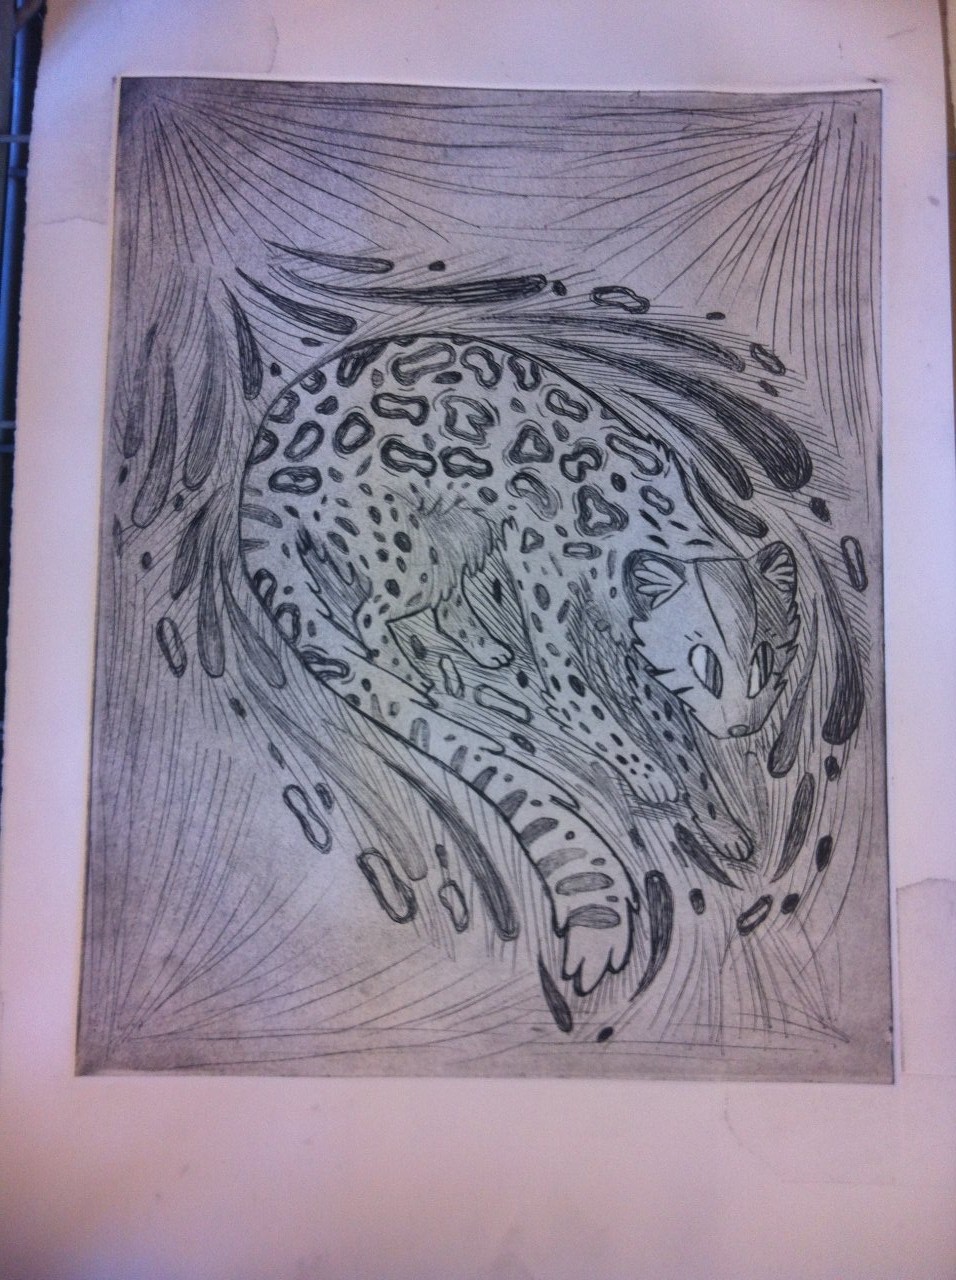 Ocelot Intaglio print